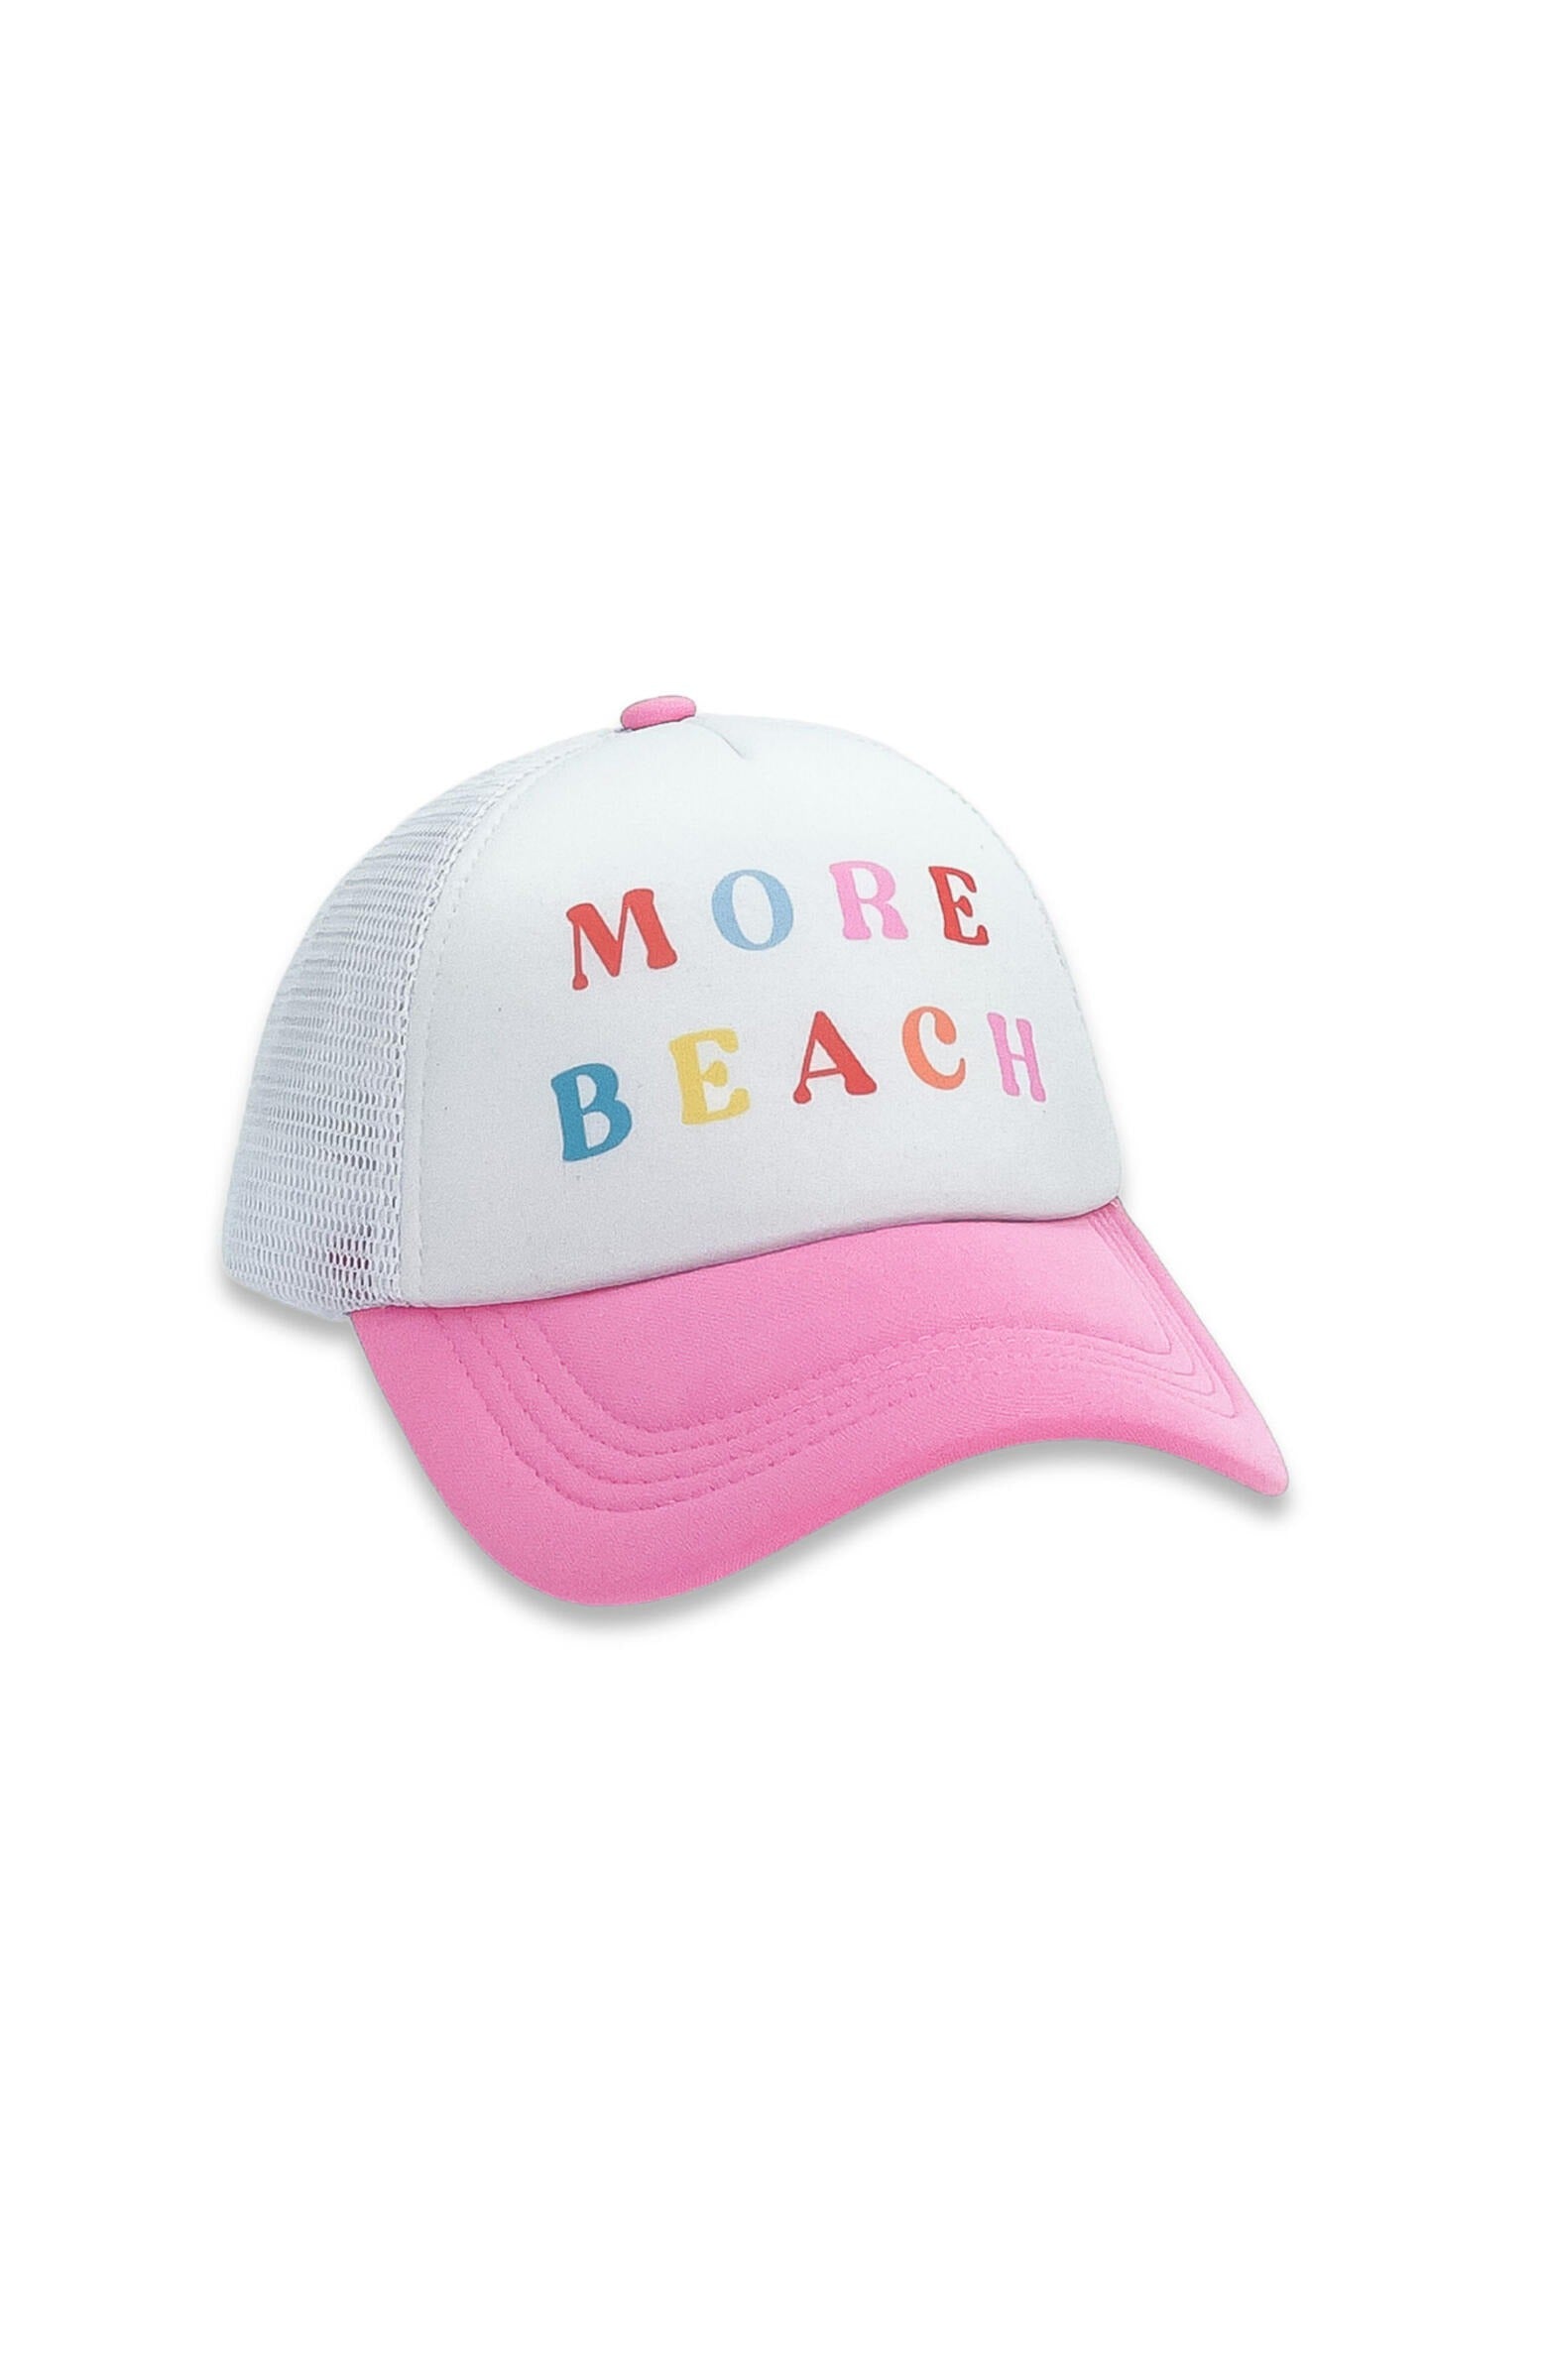 More Beach Trucker Hat